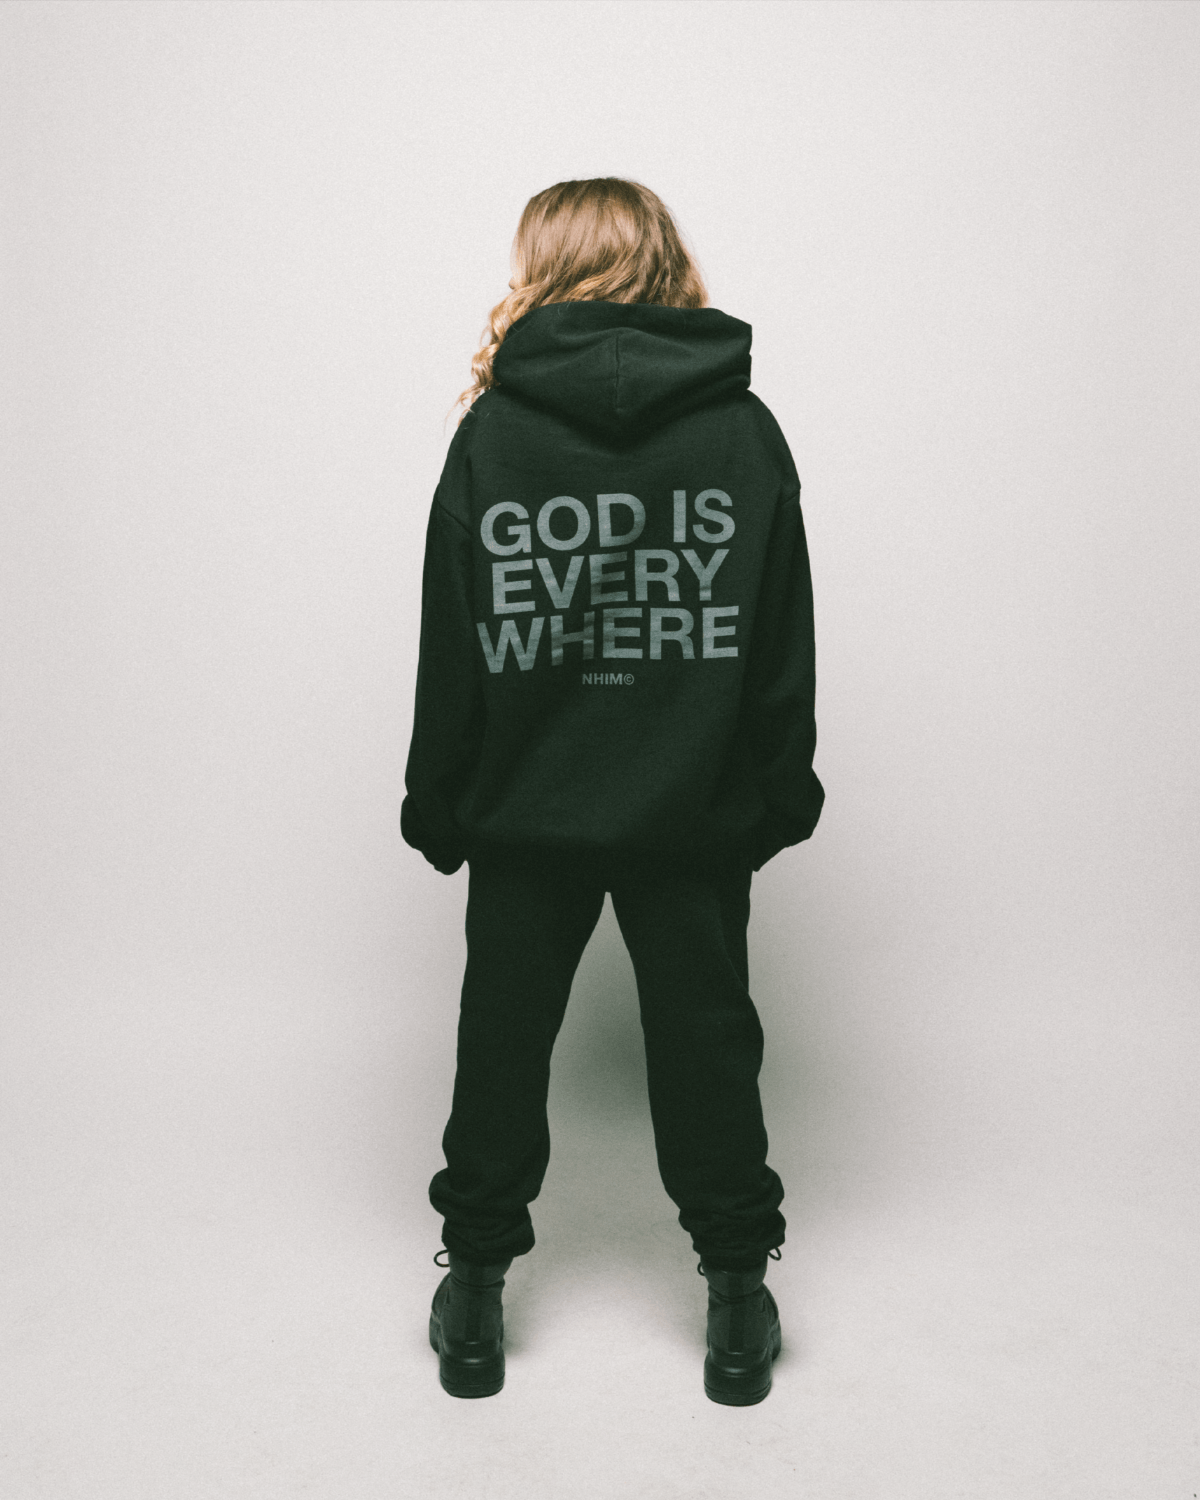 Christian hoodie sweatshirt. GOD IS EVERYWHERE HOODIE (BLACK). NHIM Apparel Christian clothing company.